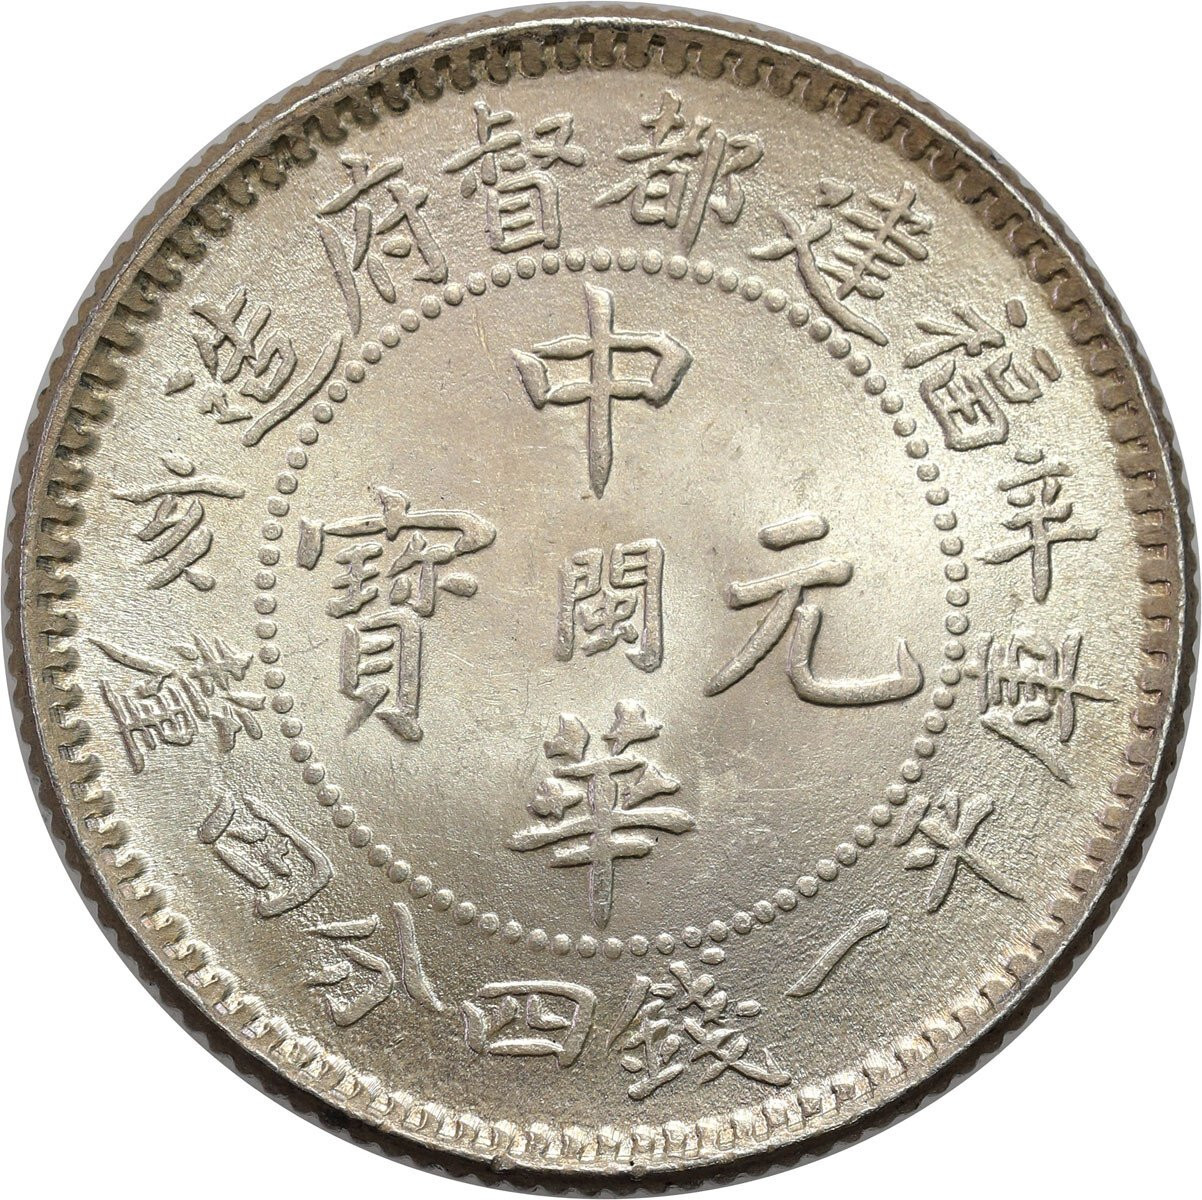 Chiny. Fukien. 1 Mace 4.4 Candareens (20 centów) (1911) – PIĘKNE